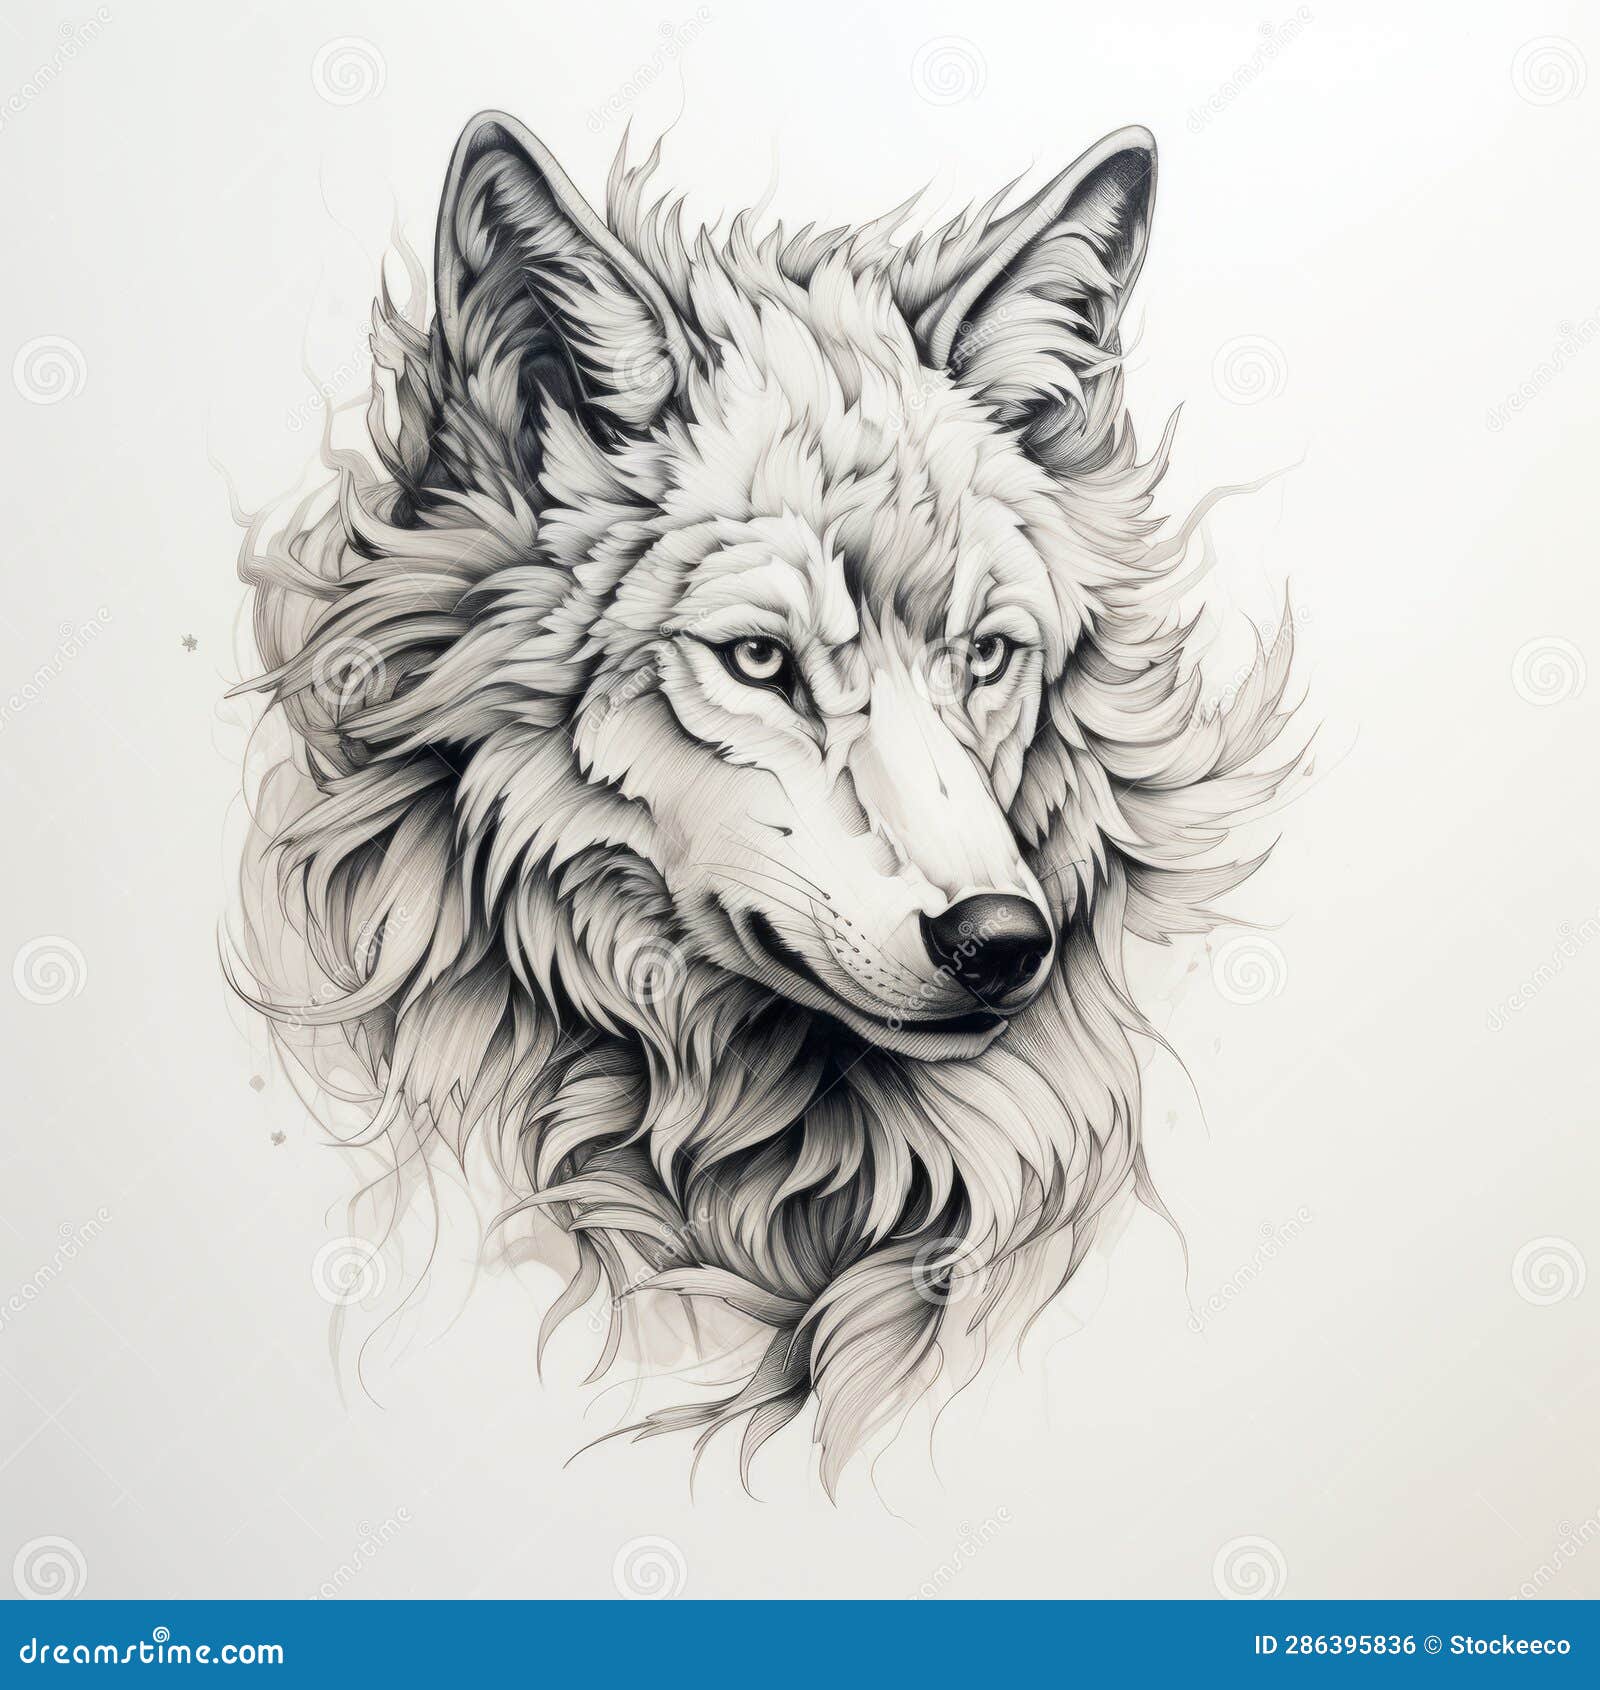 dark and raw wolf tattoo  with hidden details